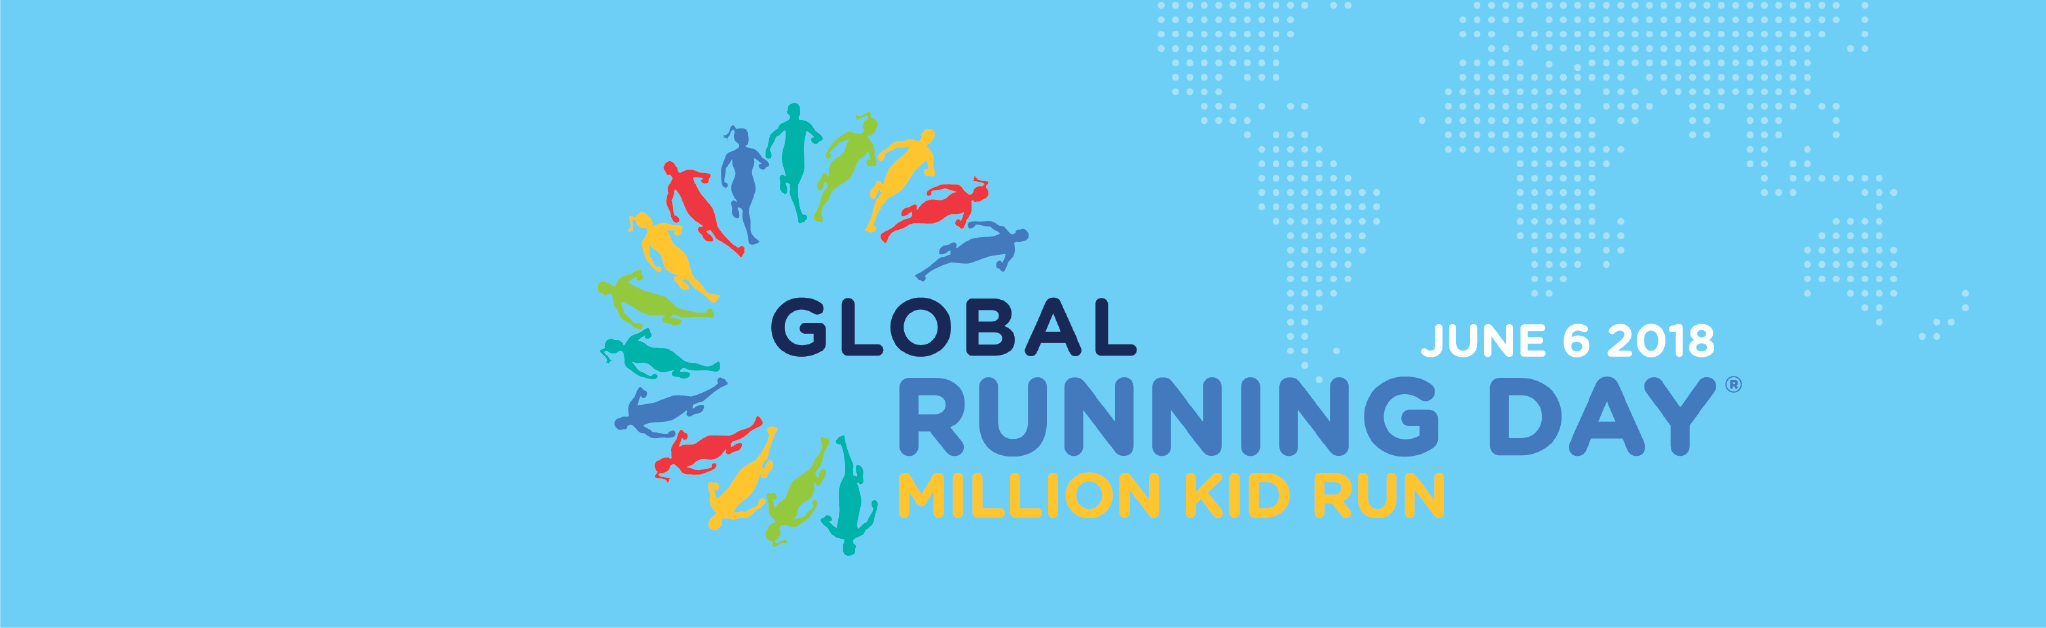 global running day logo